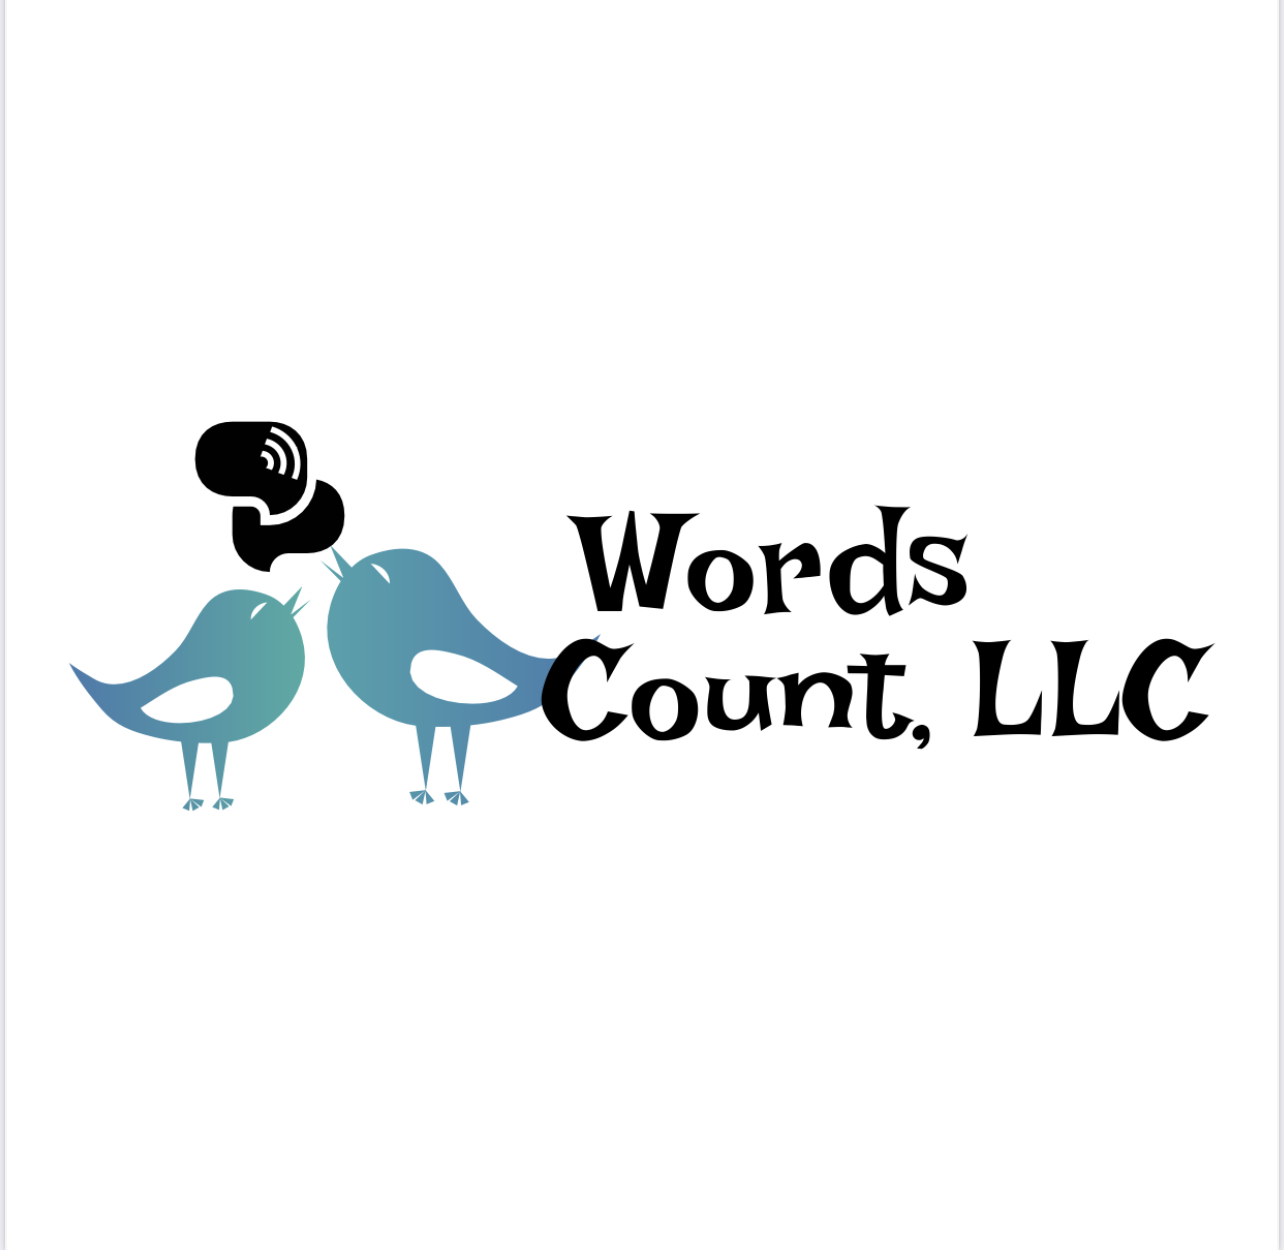 Words Count, LLC